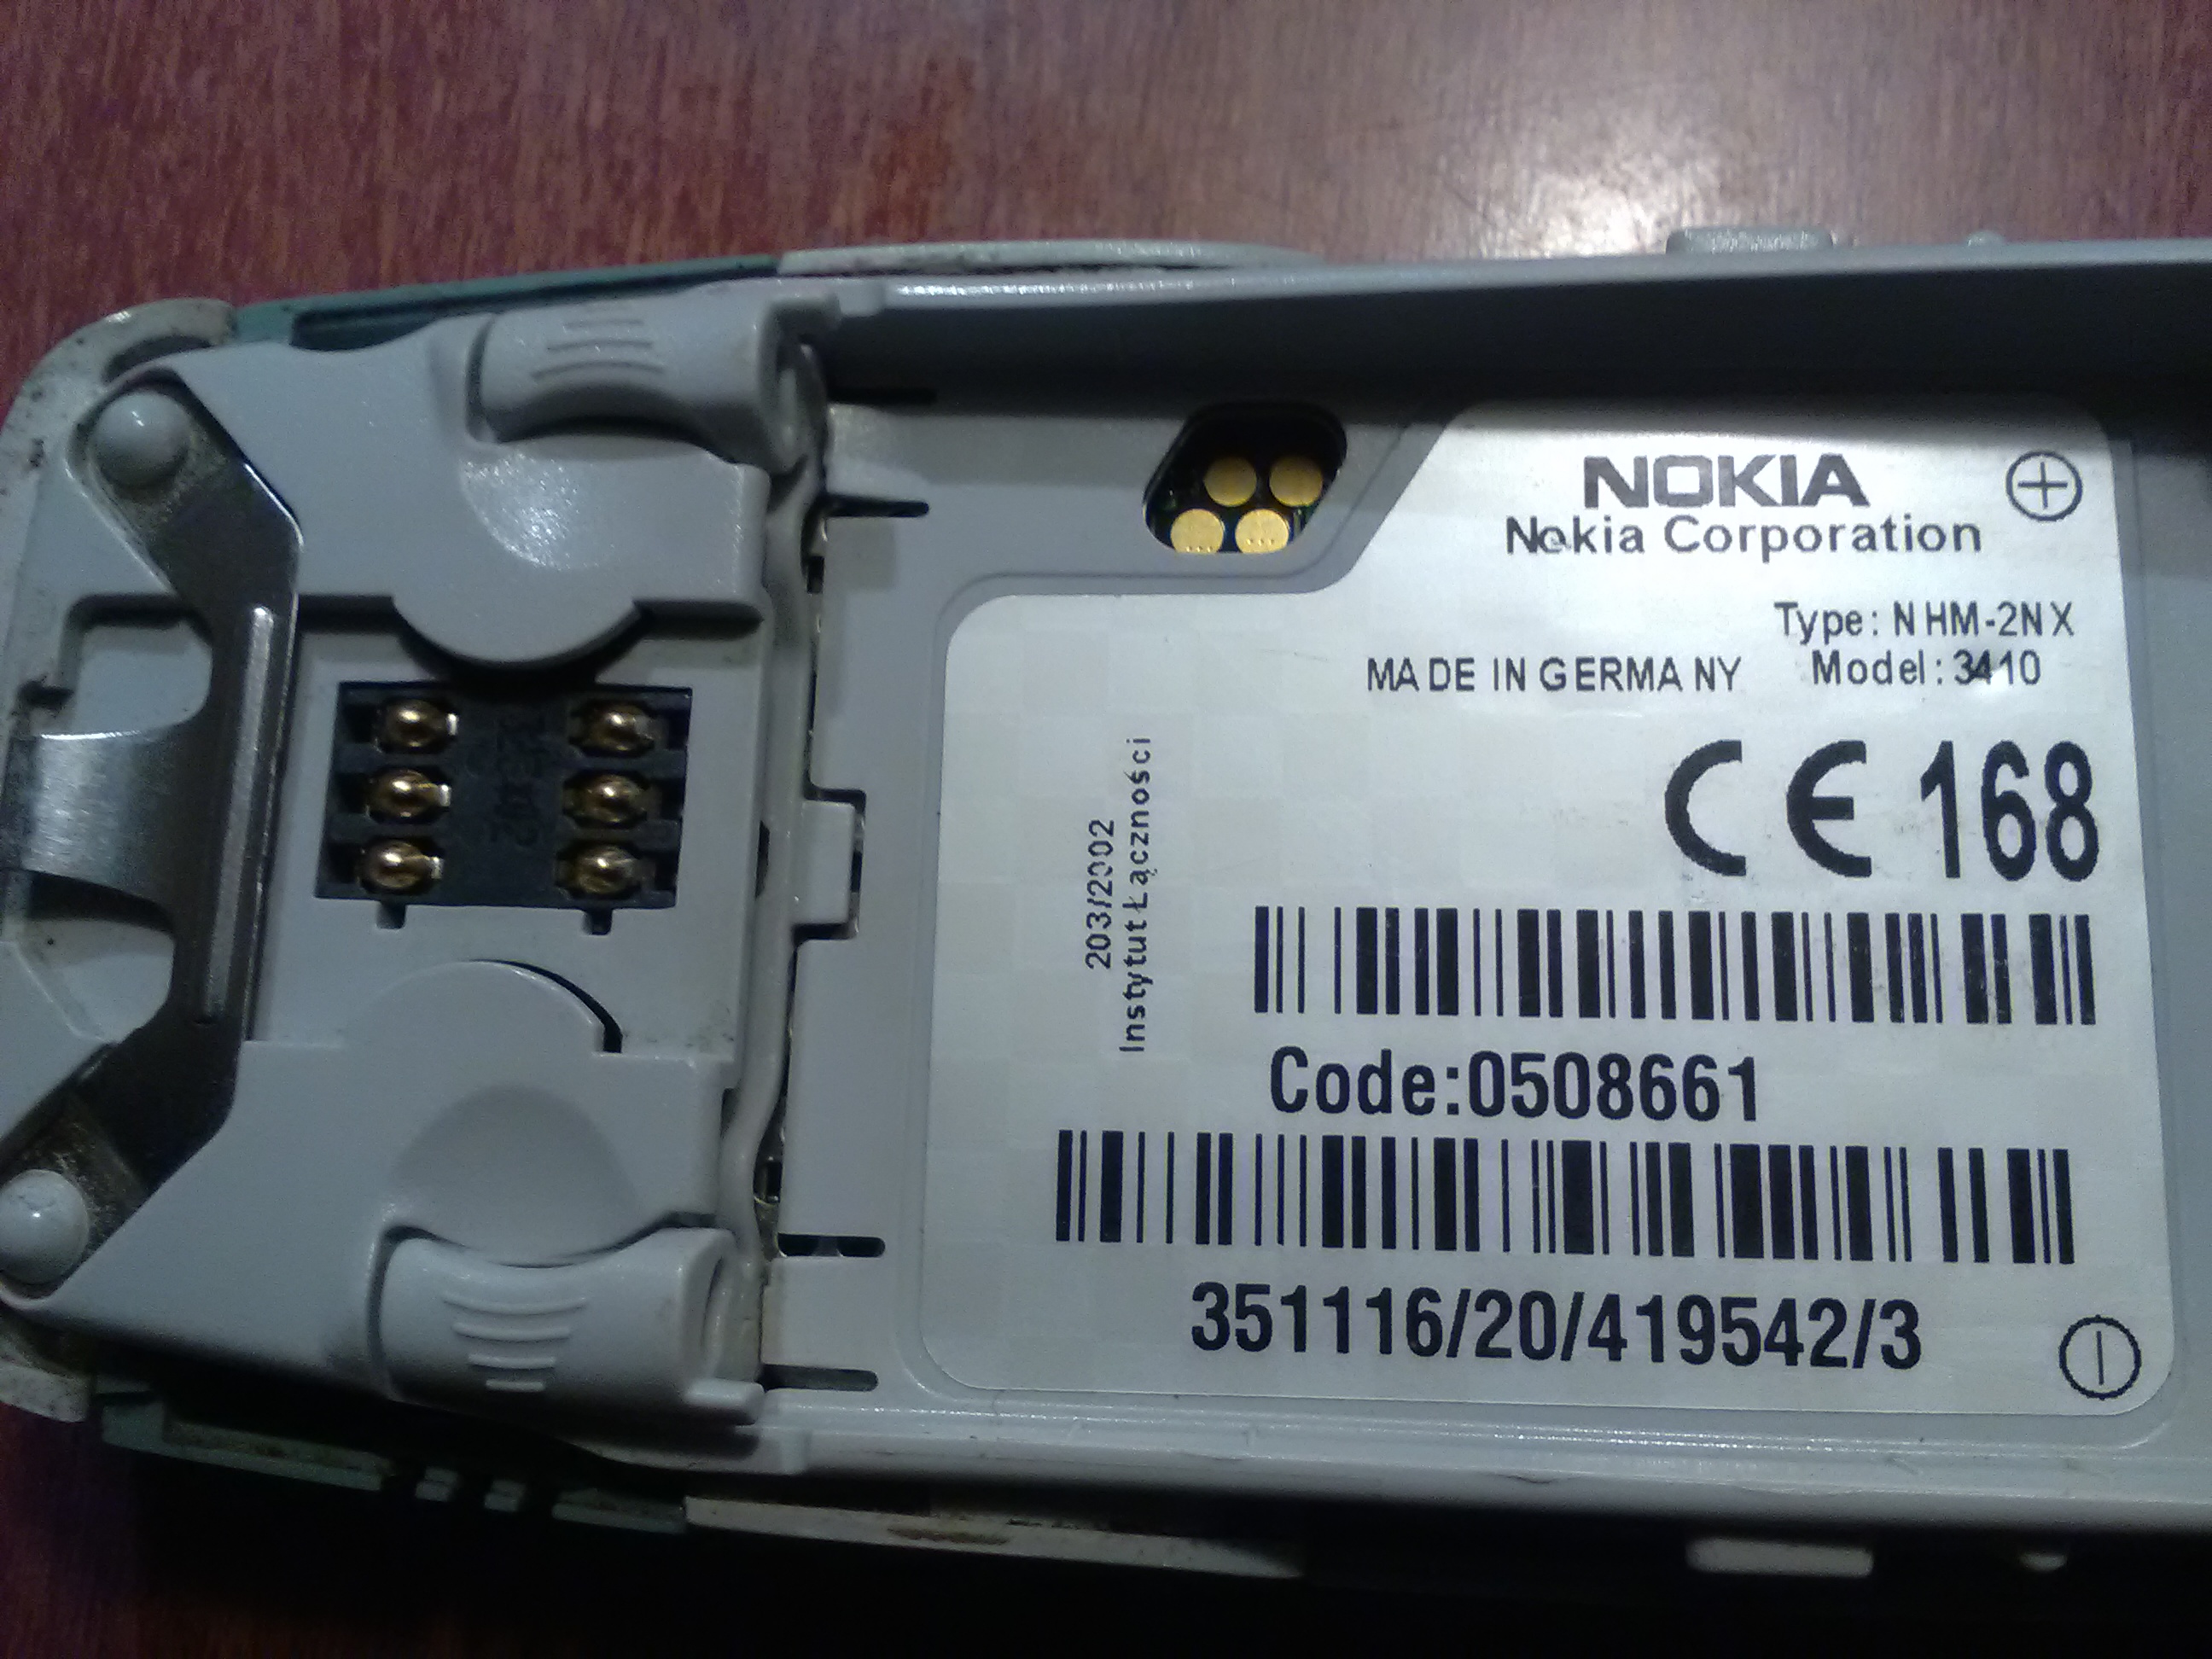 Komórka Nokia 3410 październik 2017 - 4.jpg